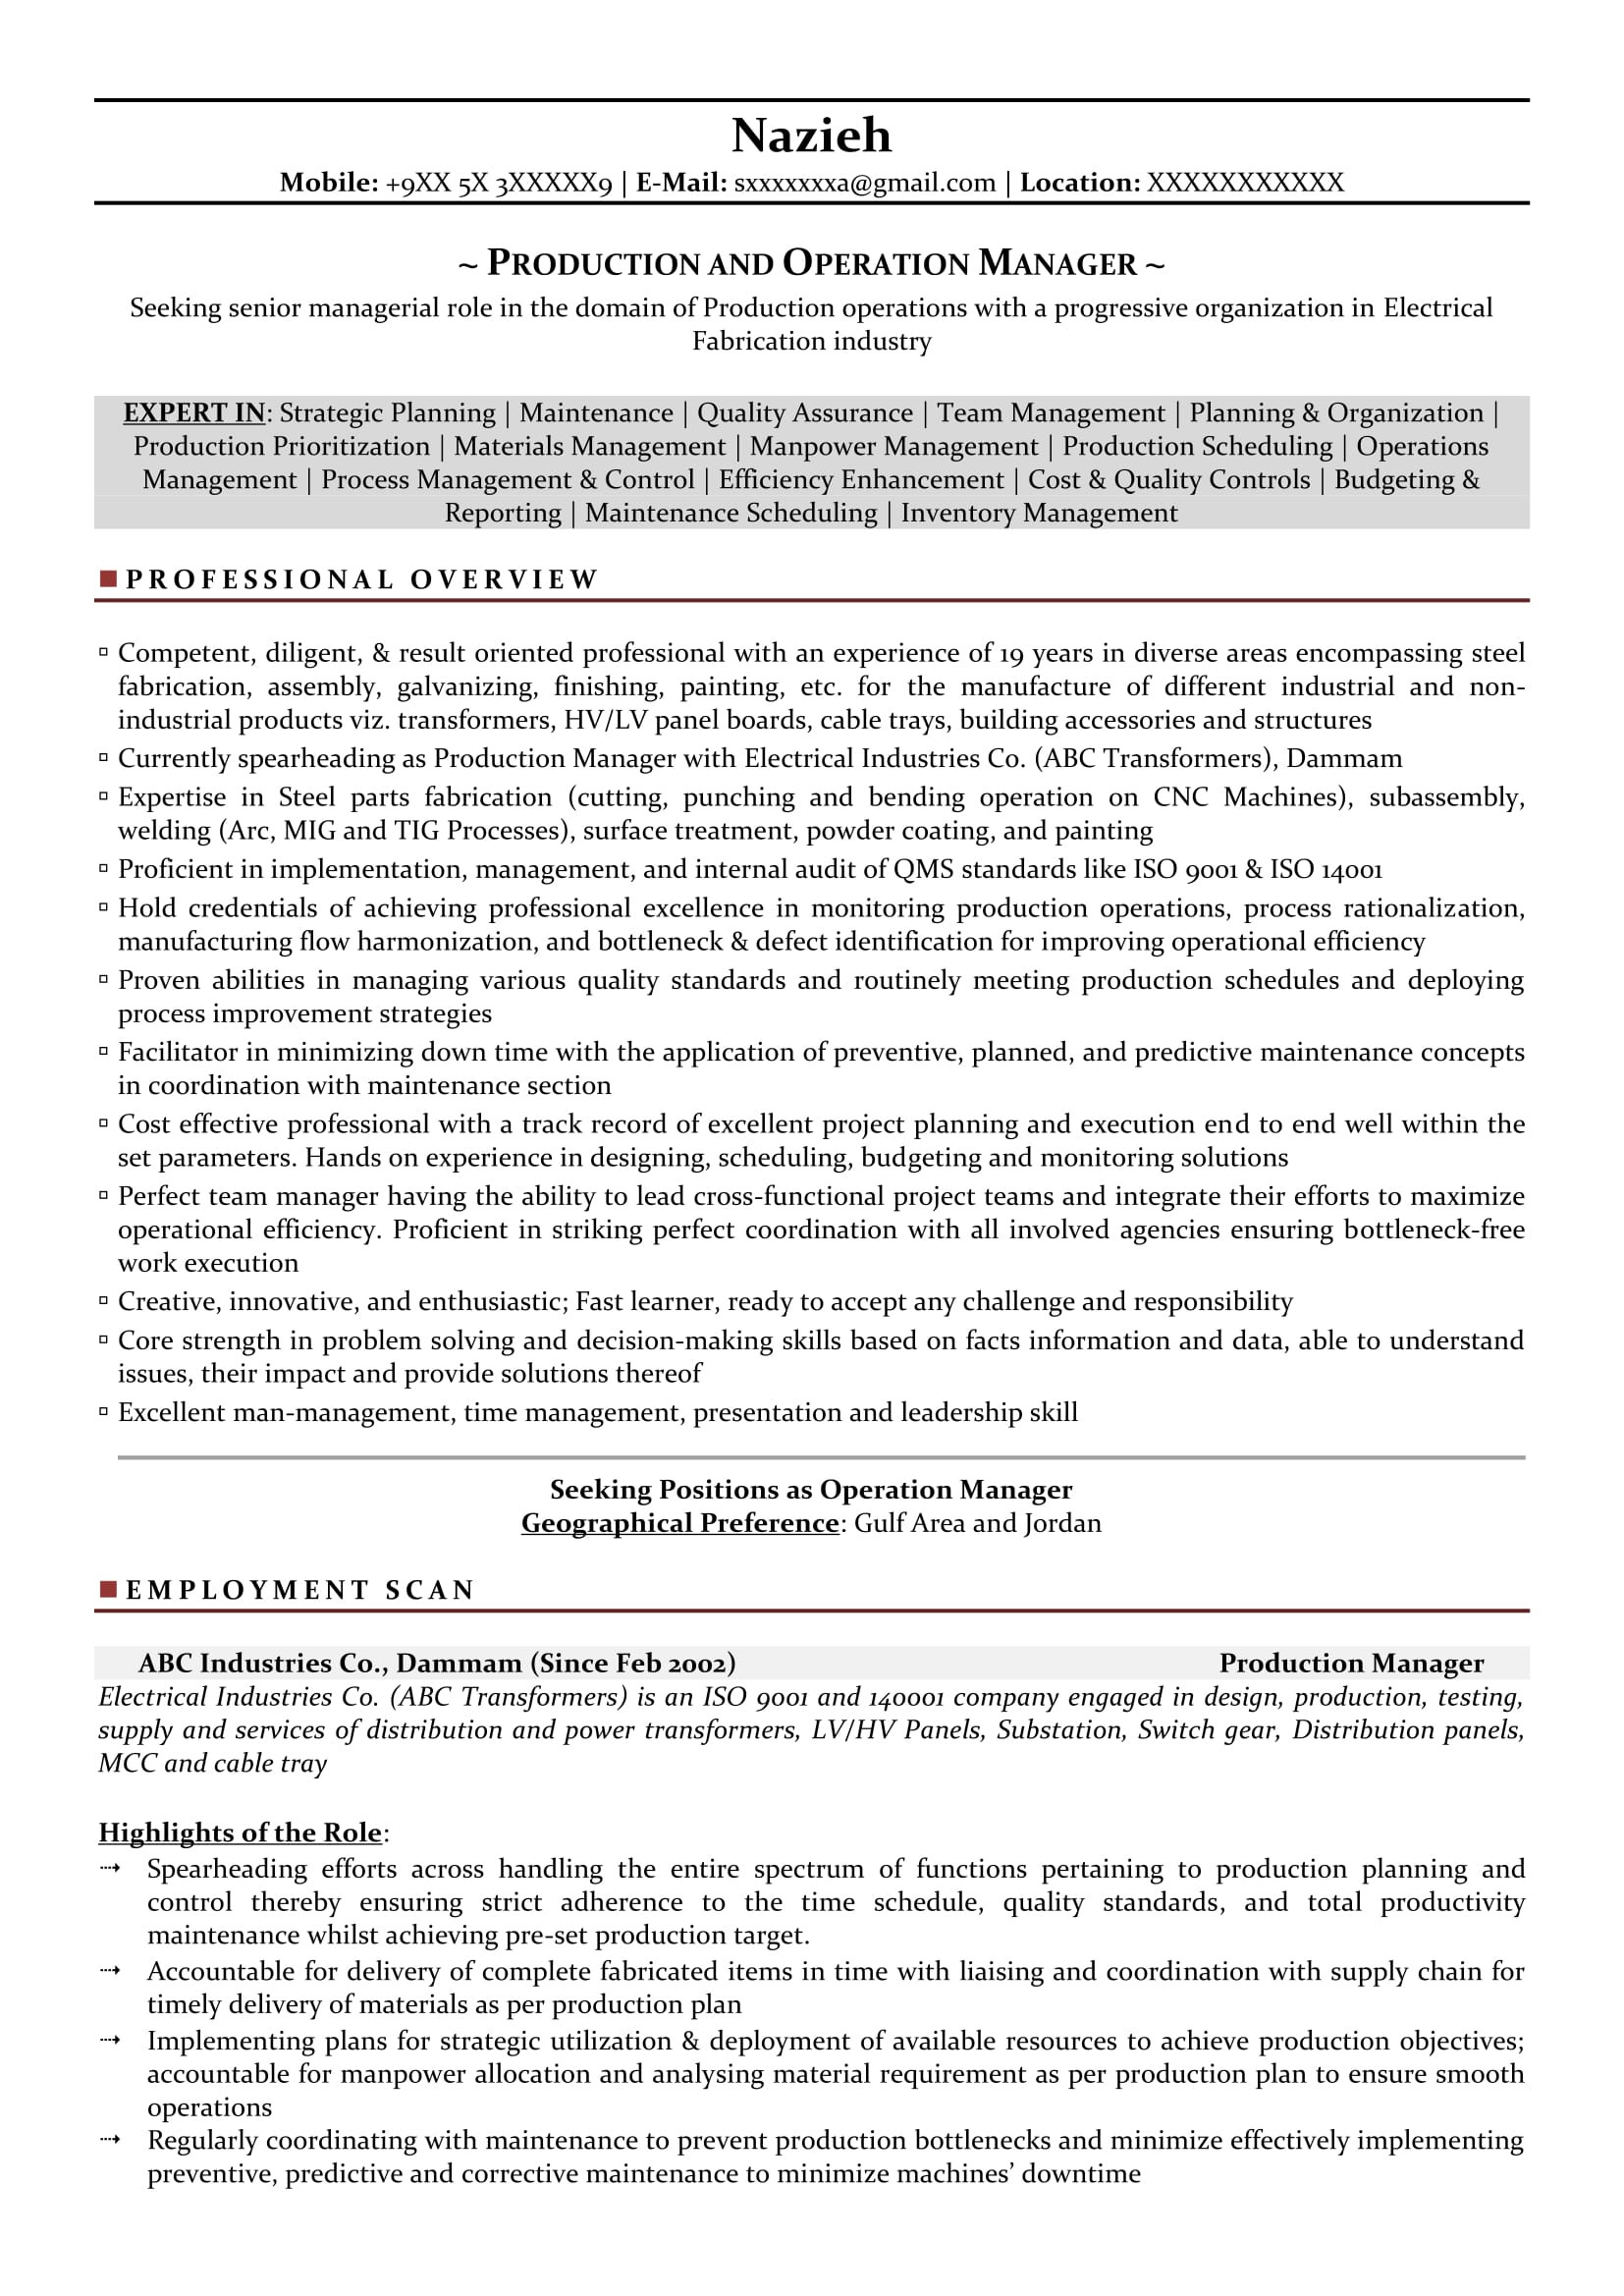 Production Planning and Control Manager Resume Sample Pdf Senior Manufacturing Supervisor Resume July 2020